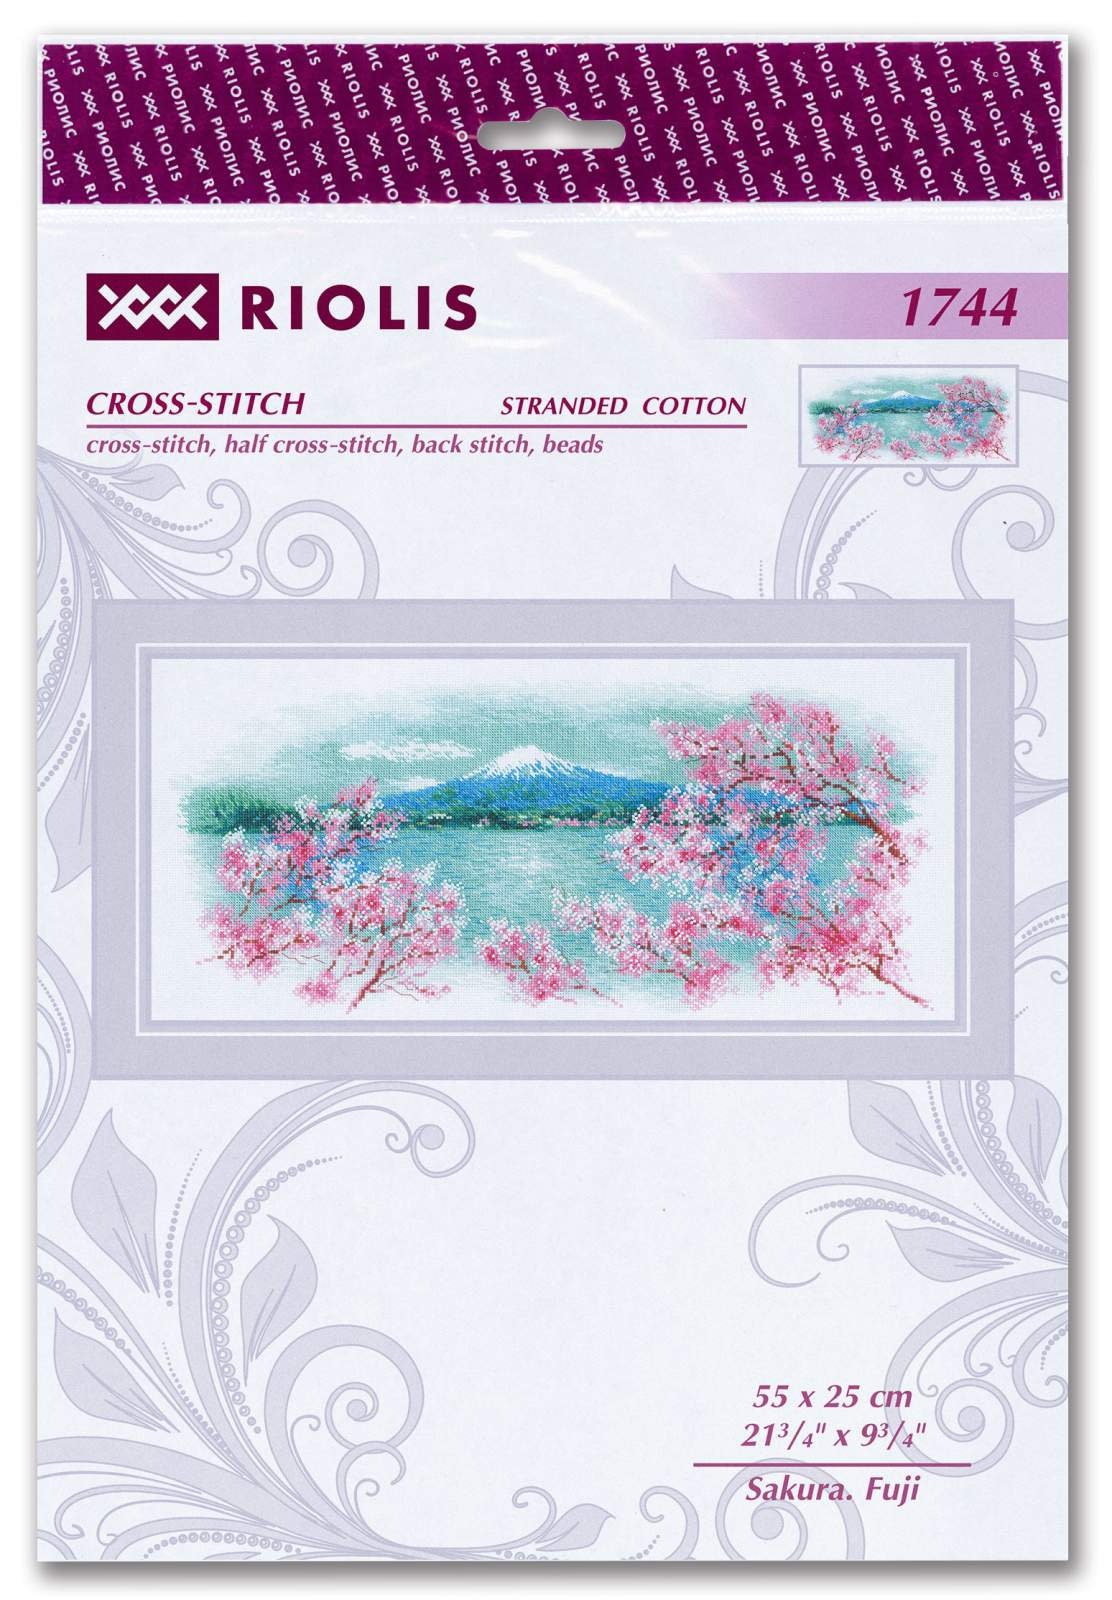 Cross Stitch Kits Collection Sakura. Fuji, Brigde and Pagoda by Riolis 1743  1744 1745 Choose One of Them or All 3 Kits. 